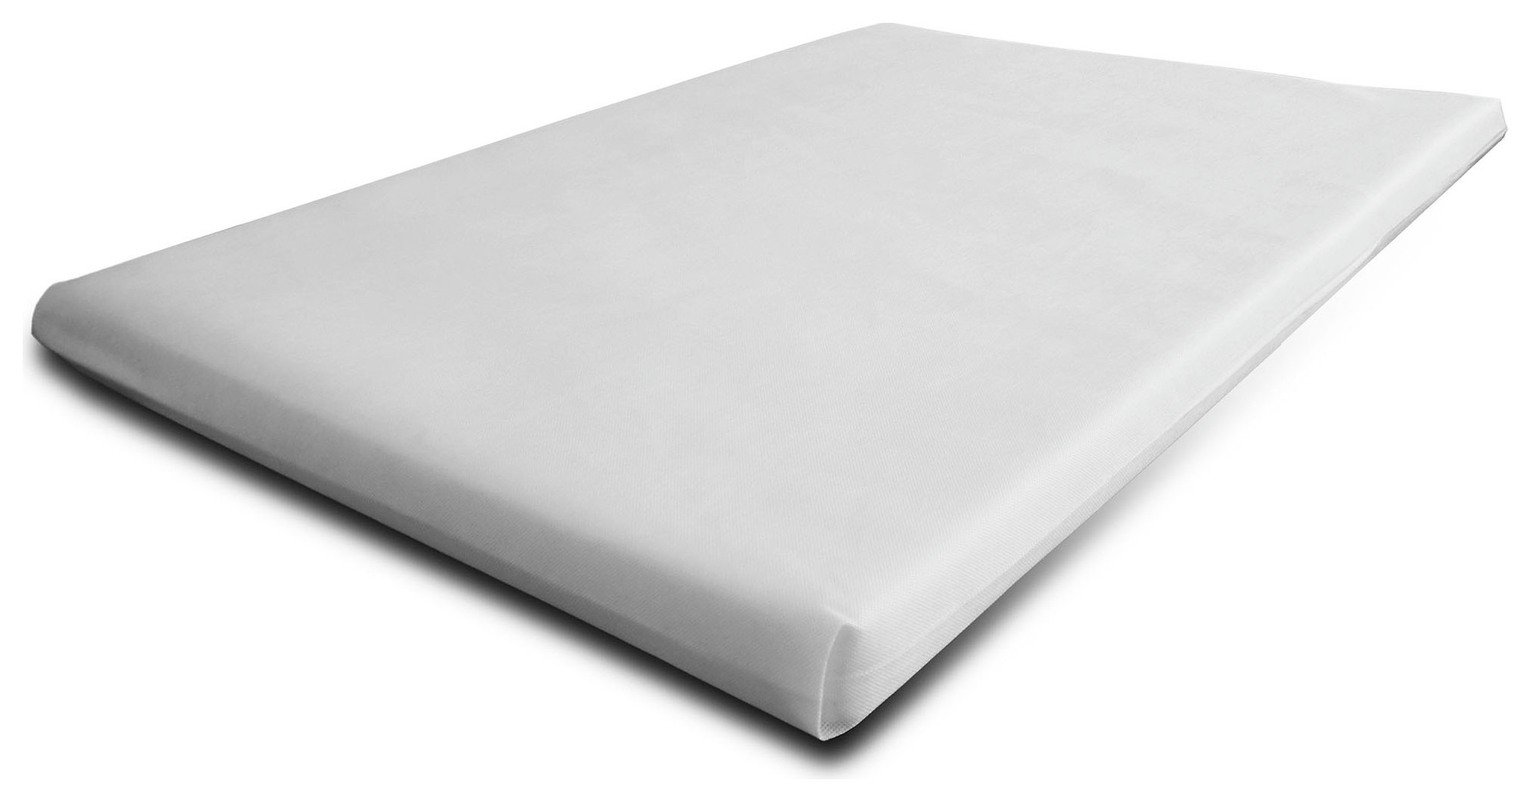 foam cot mattress kmart